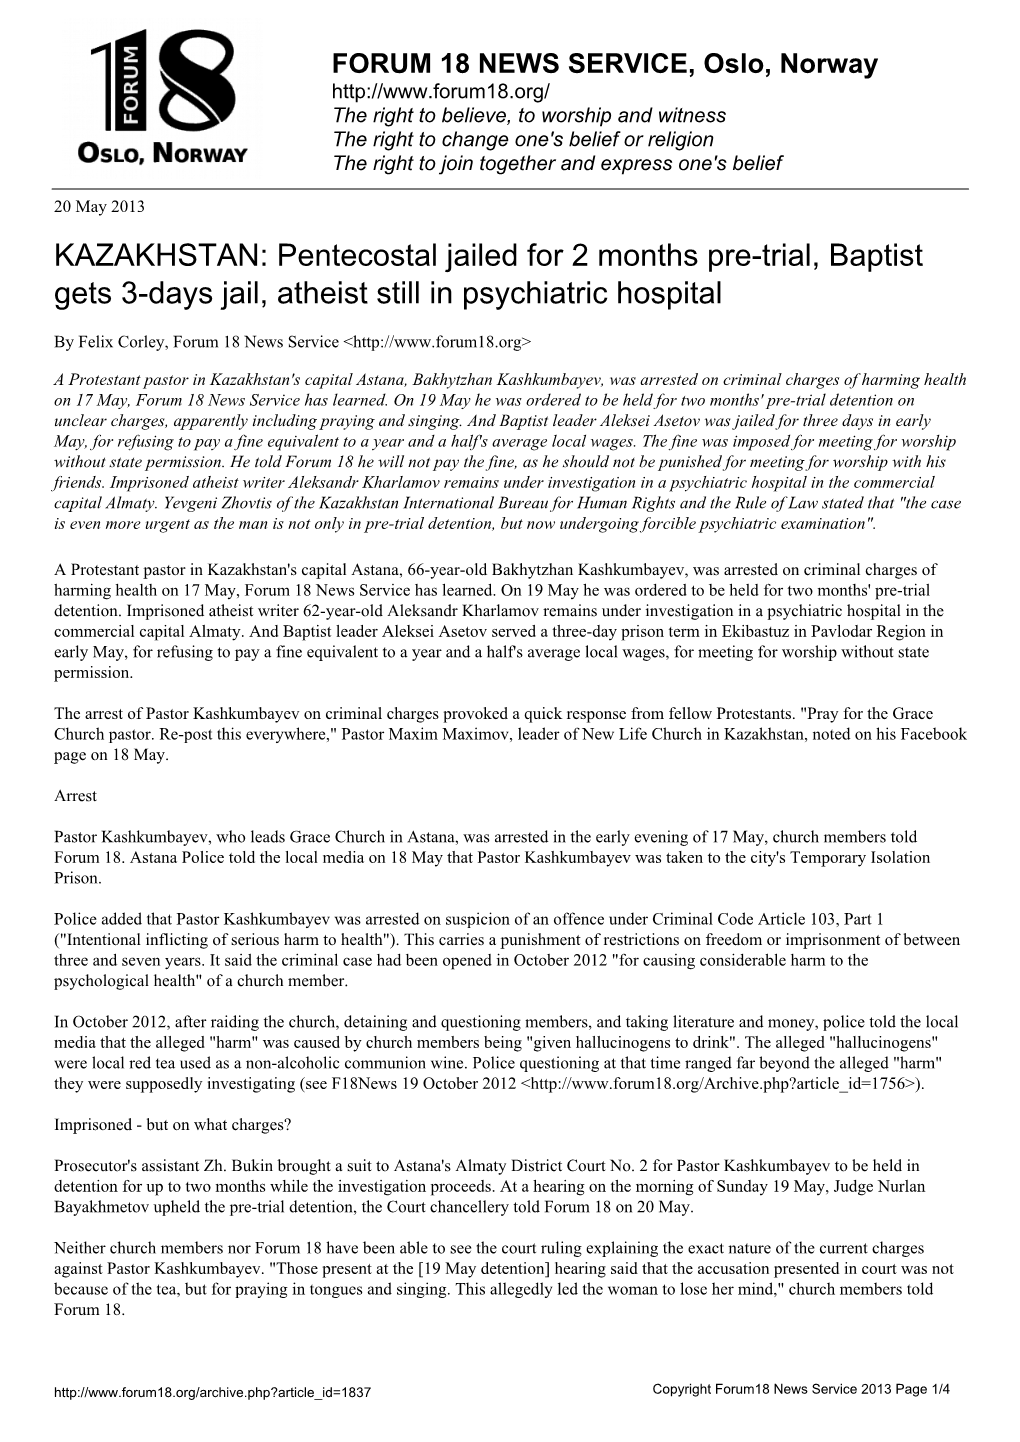 KAZAKHSTAN: Pentecostal Jailed for 2 Months Pre-Trial, Baptist Gets 3-Days Jail, Atheist Still in Psychiatric Hospital